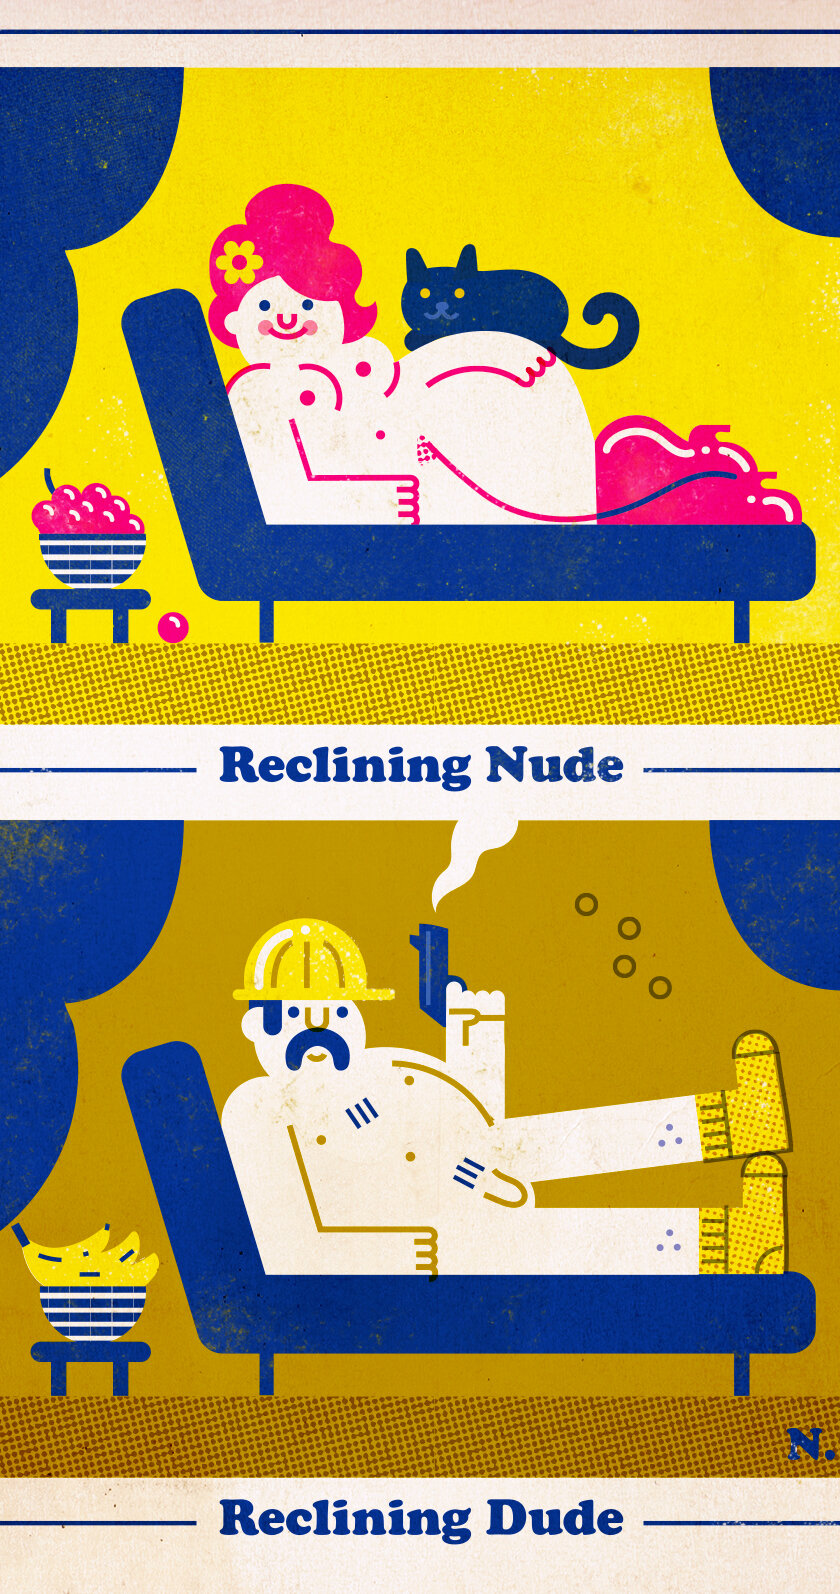 Reclining nude, reclining dude final.jpg